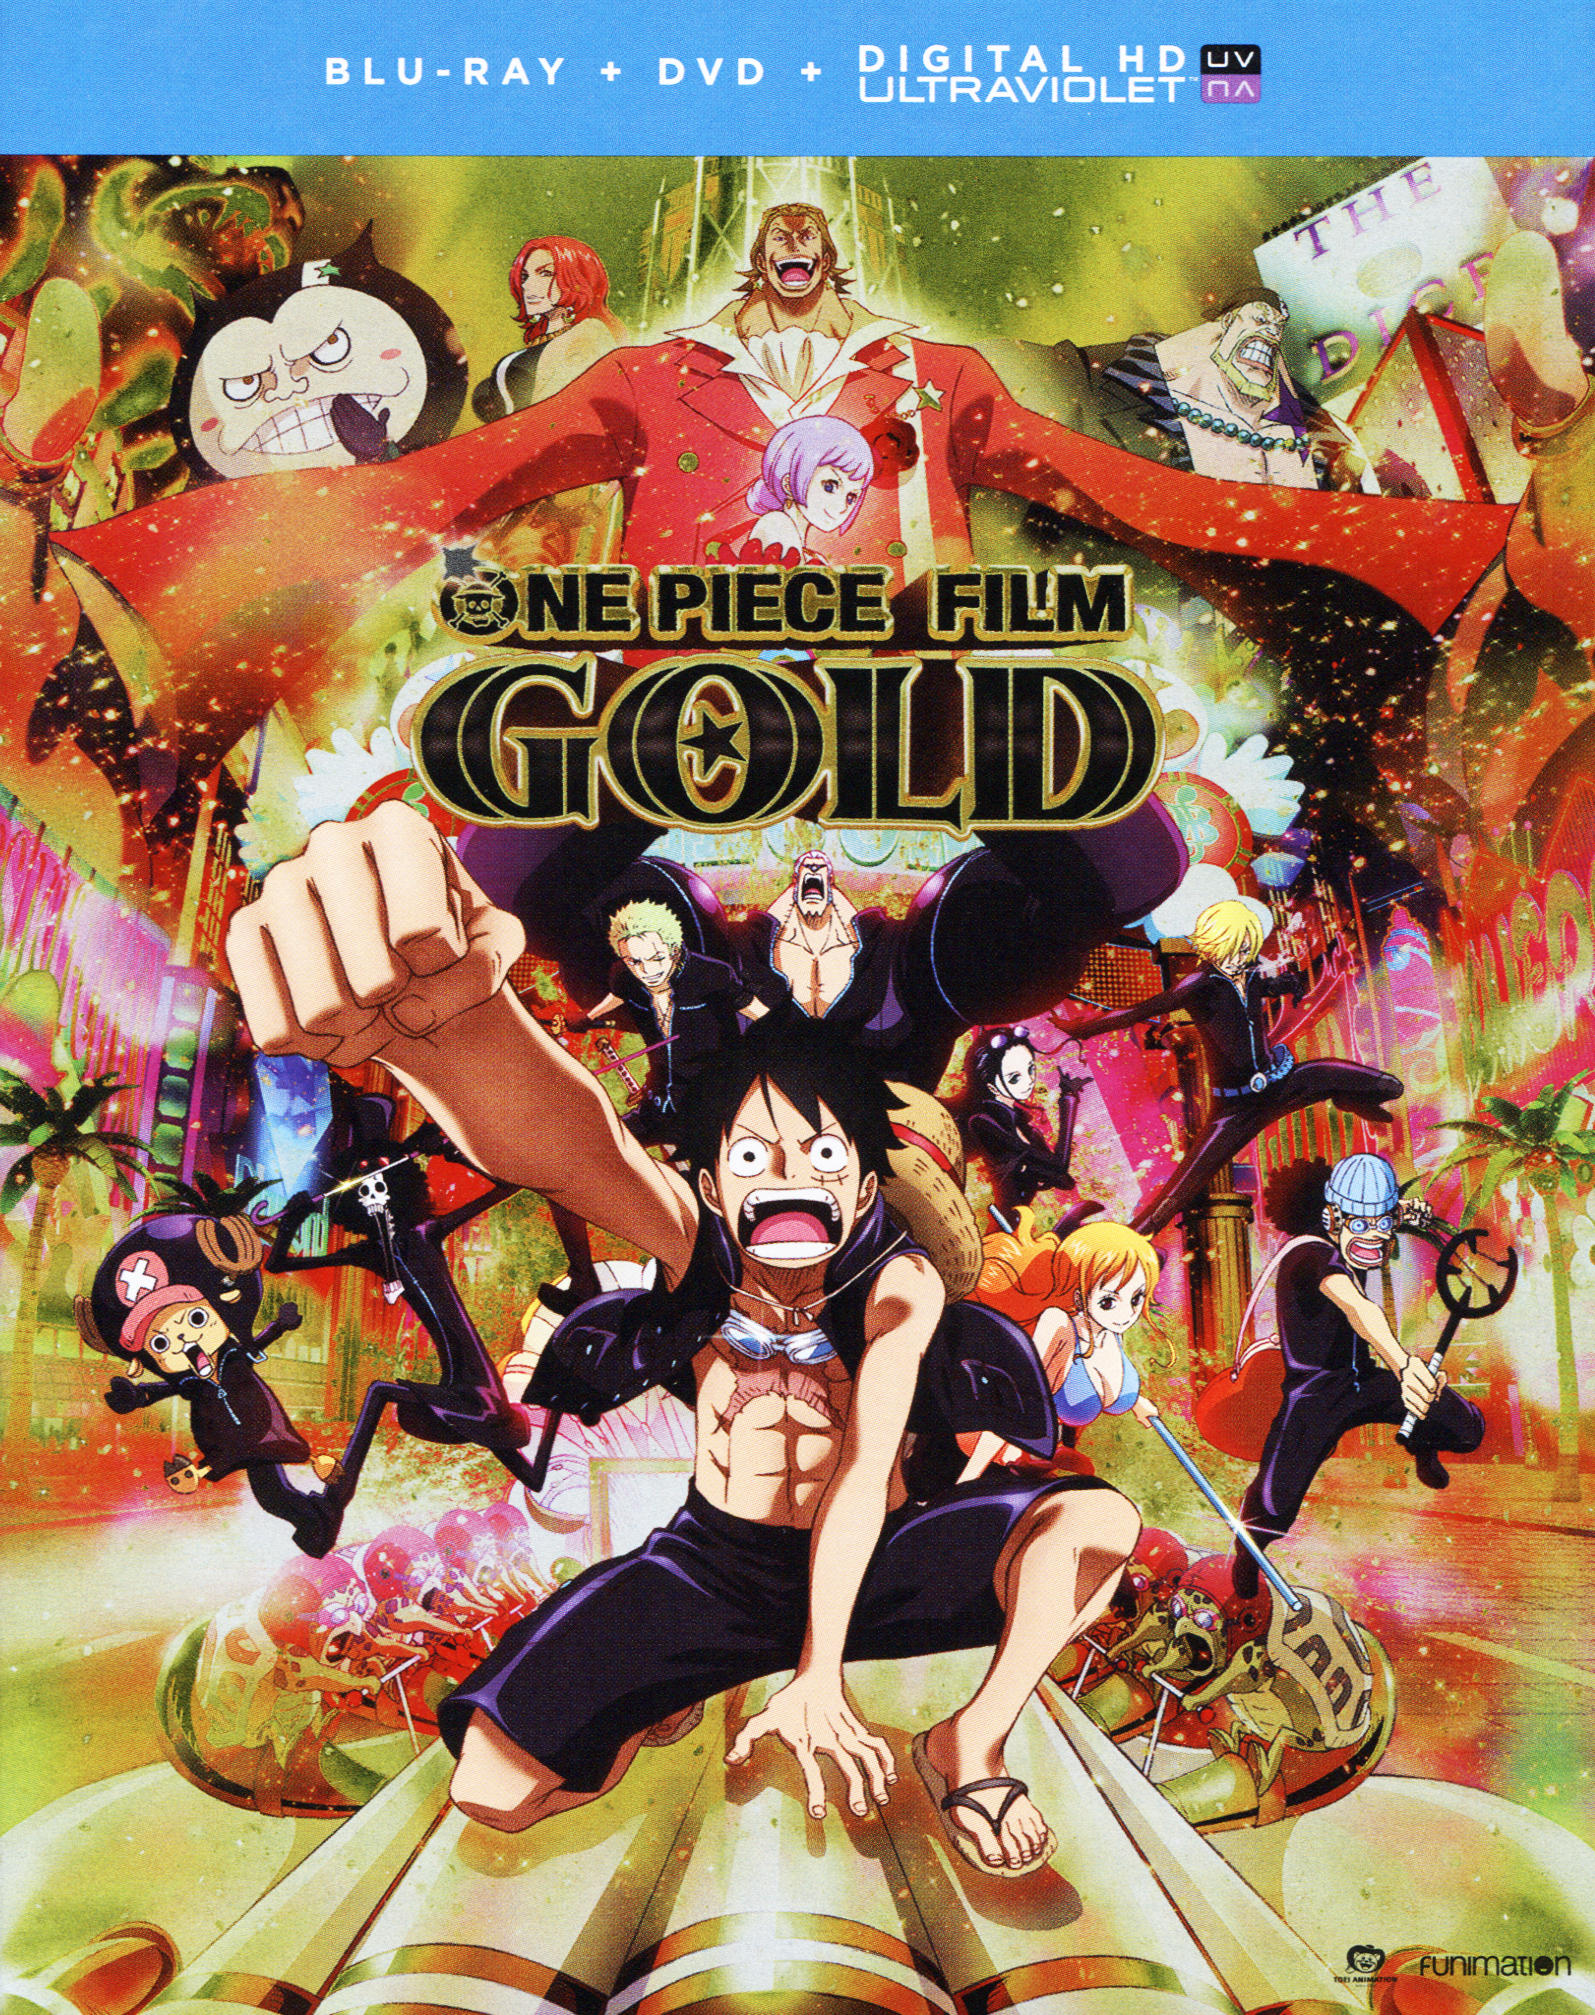 One Piece Film Gold Now on Bluray, Attack on Titan Season 2 Debuts